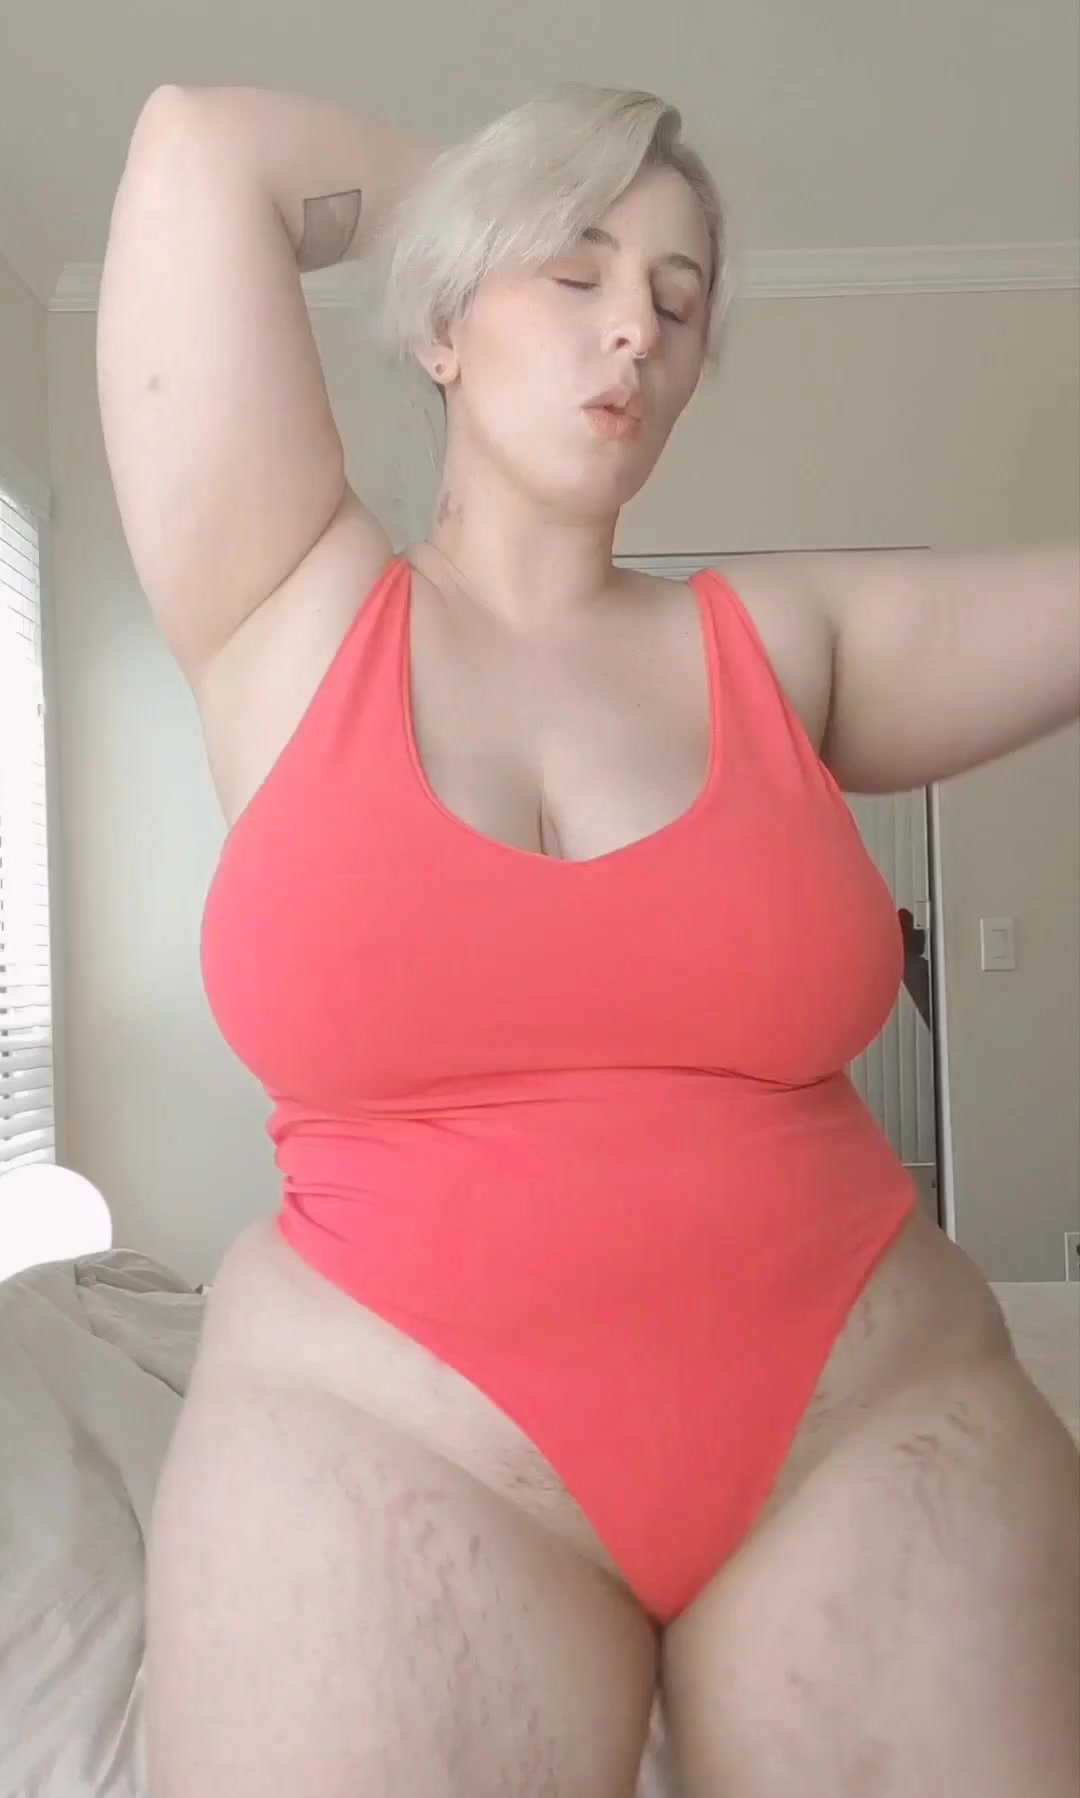 Hottest Bbw Sluts - Bbw ssbbw: Sexy chubby slut - video 2 - ThisVid.com